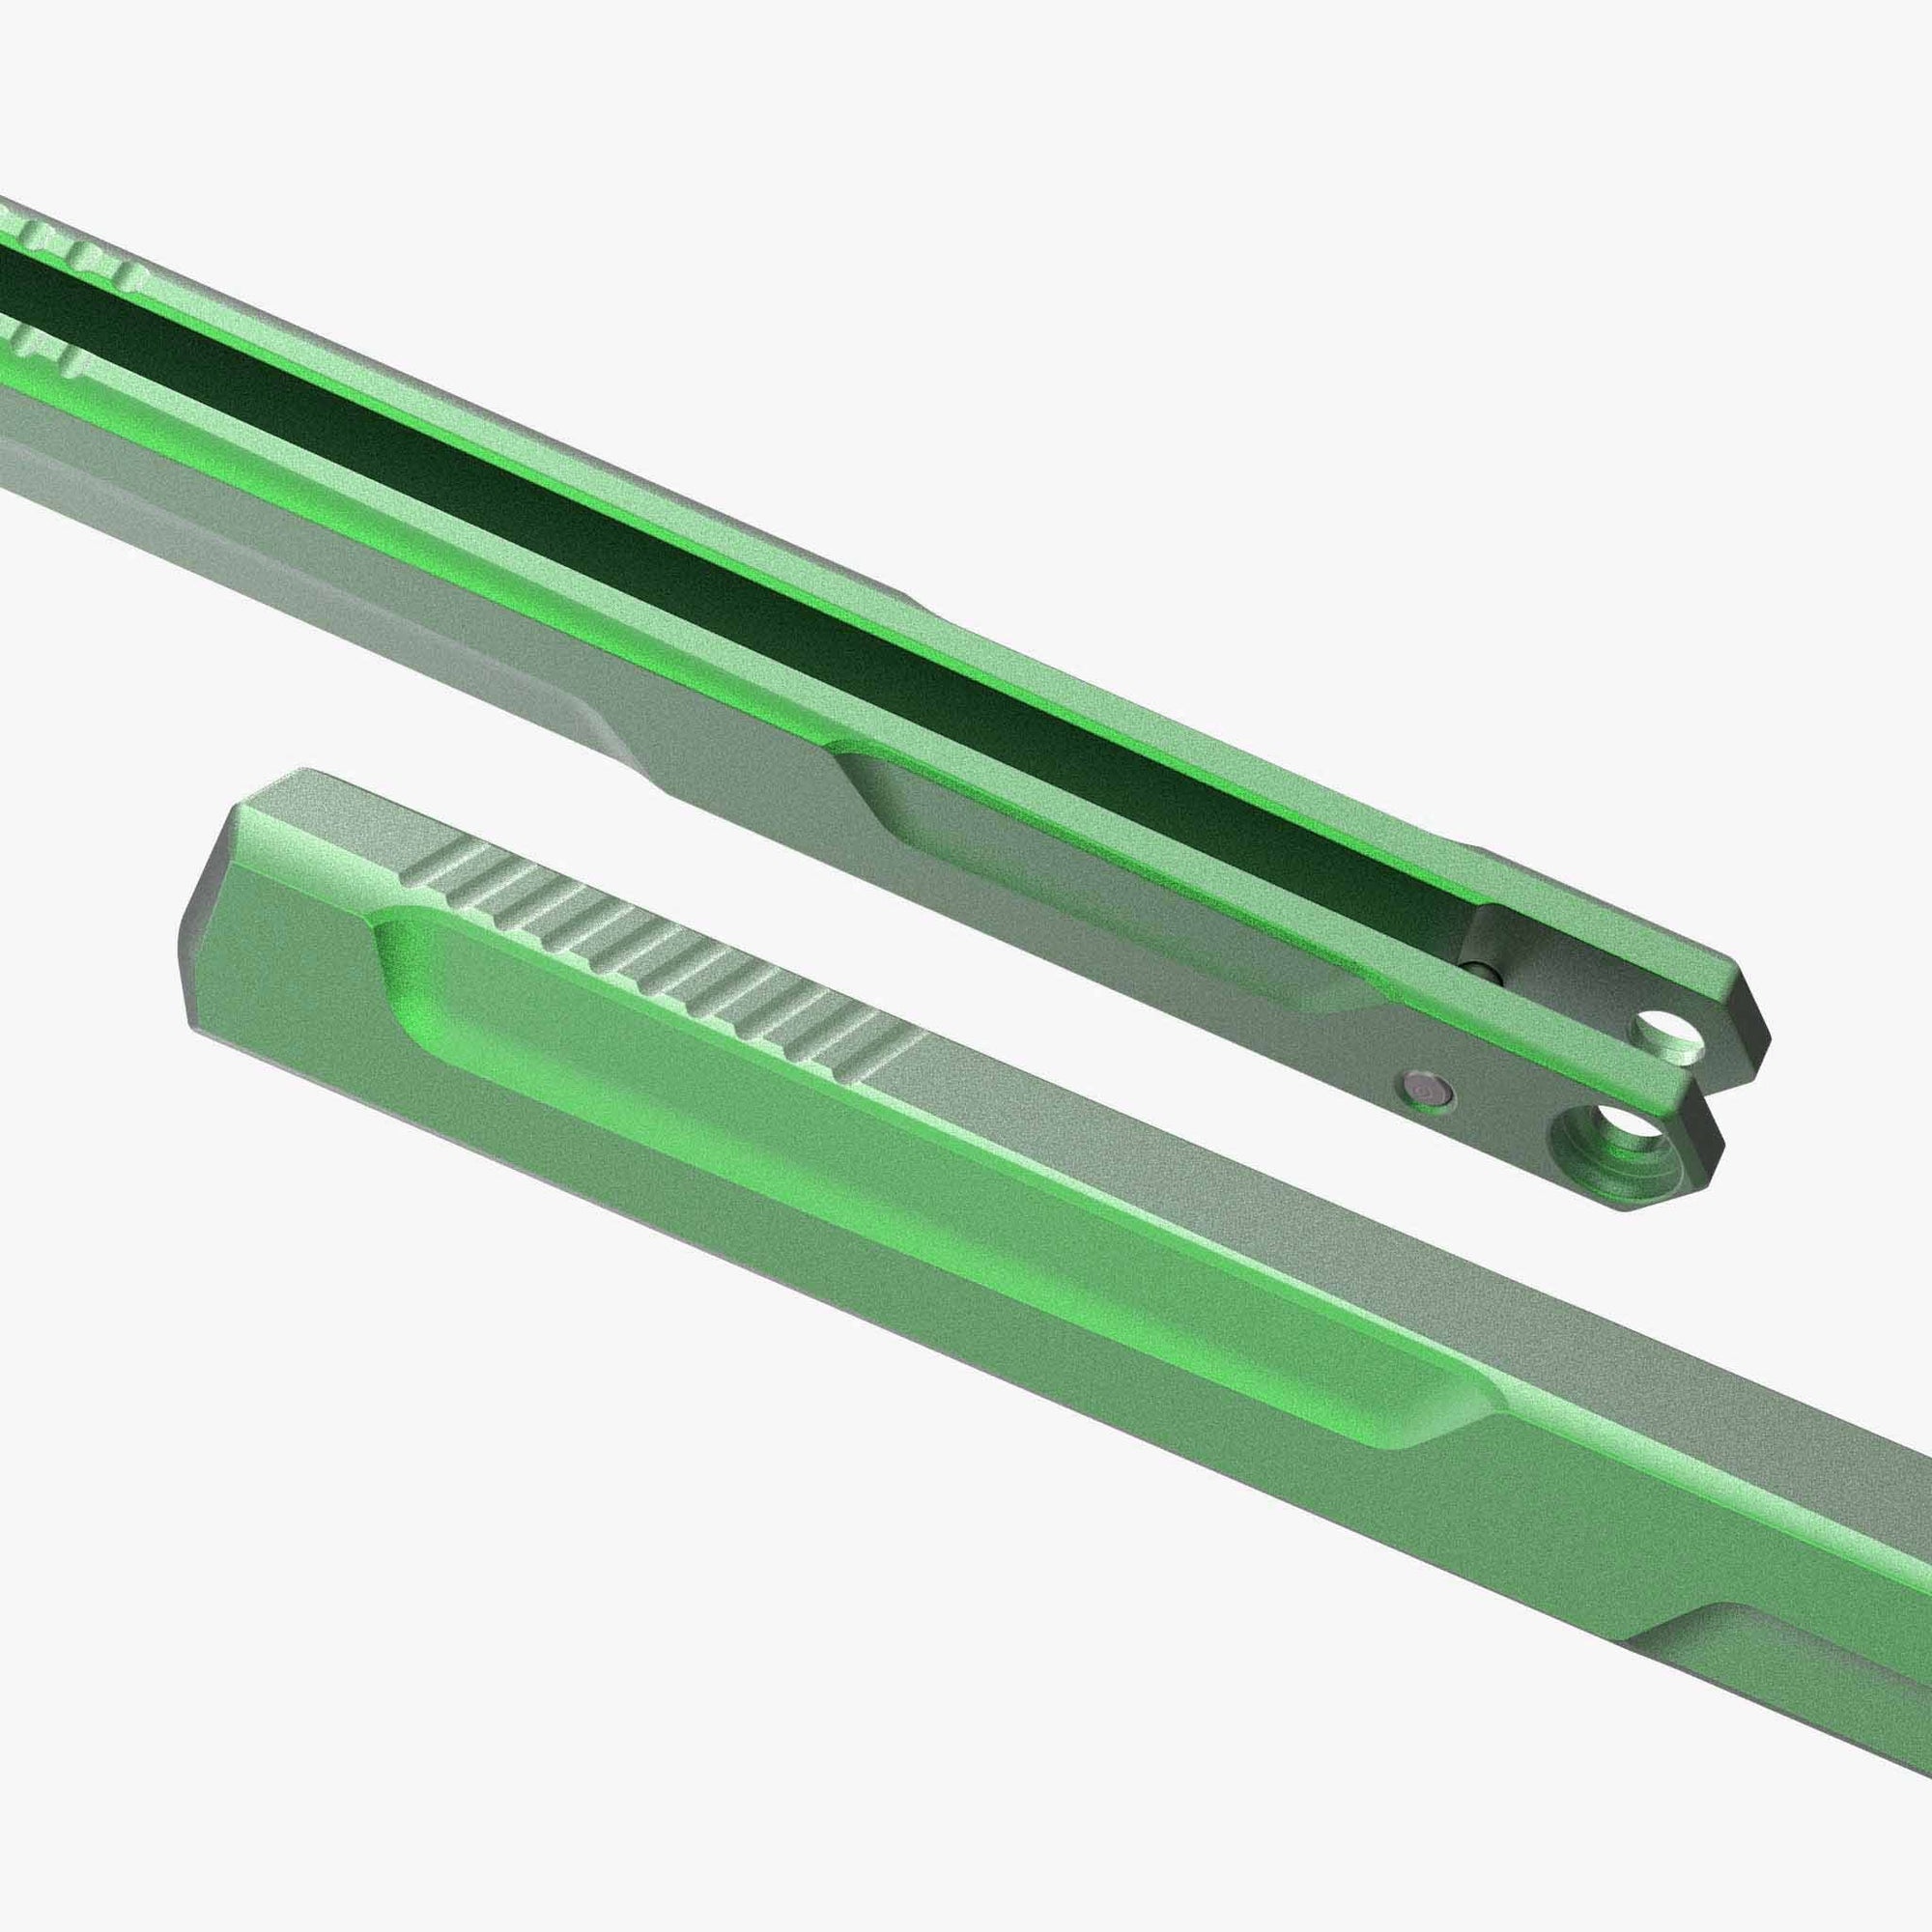 Aluminum v1.5 Handles for the Kershaw Lucha Balisong- Emerald